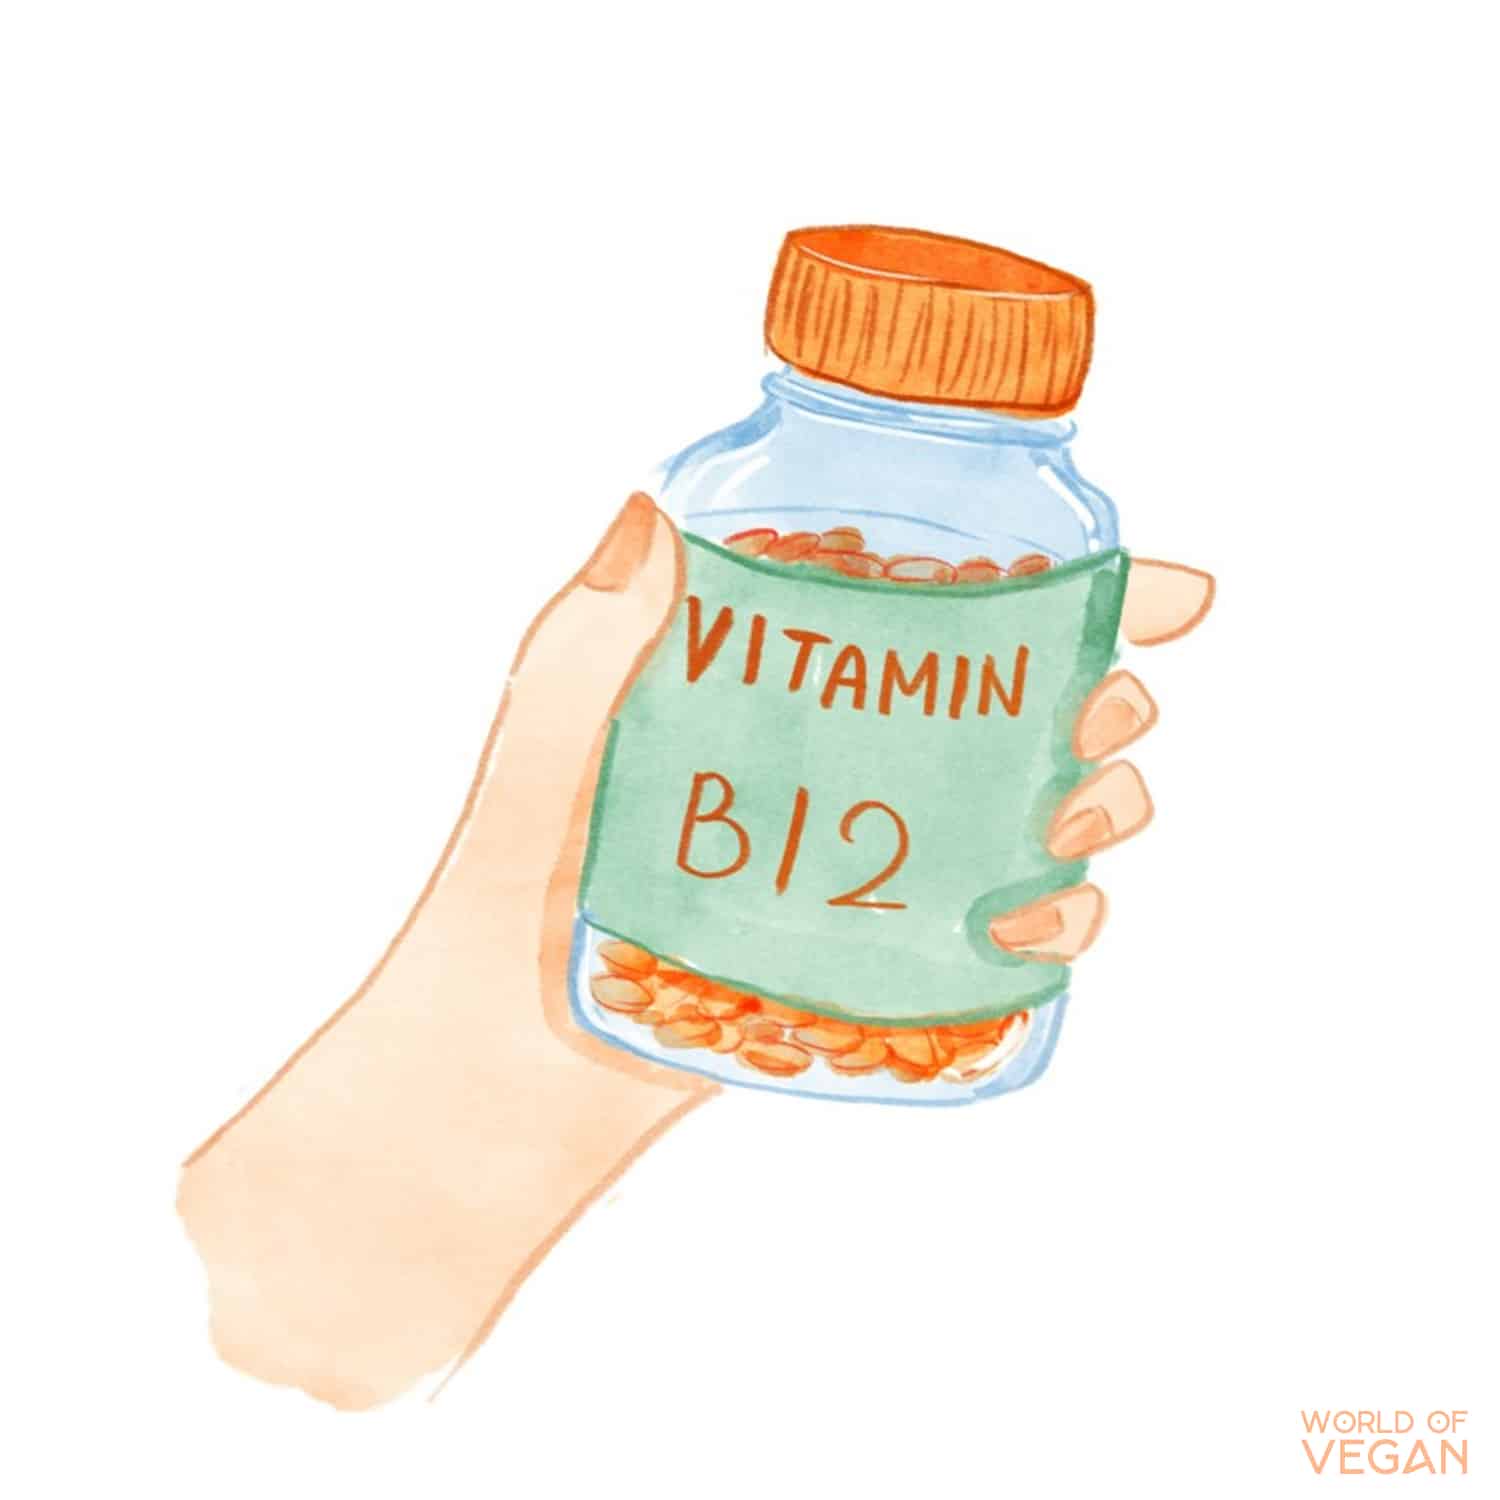 Vitamin B12 Illustration | Photo of a bottle of Vitamin B12 | World of Vegan | #nutrition #art #vegan #illustration